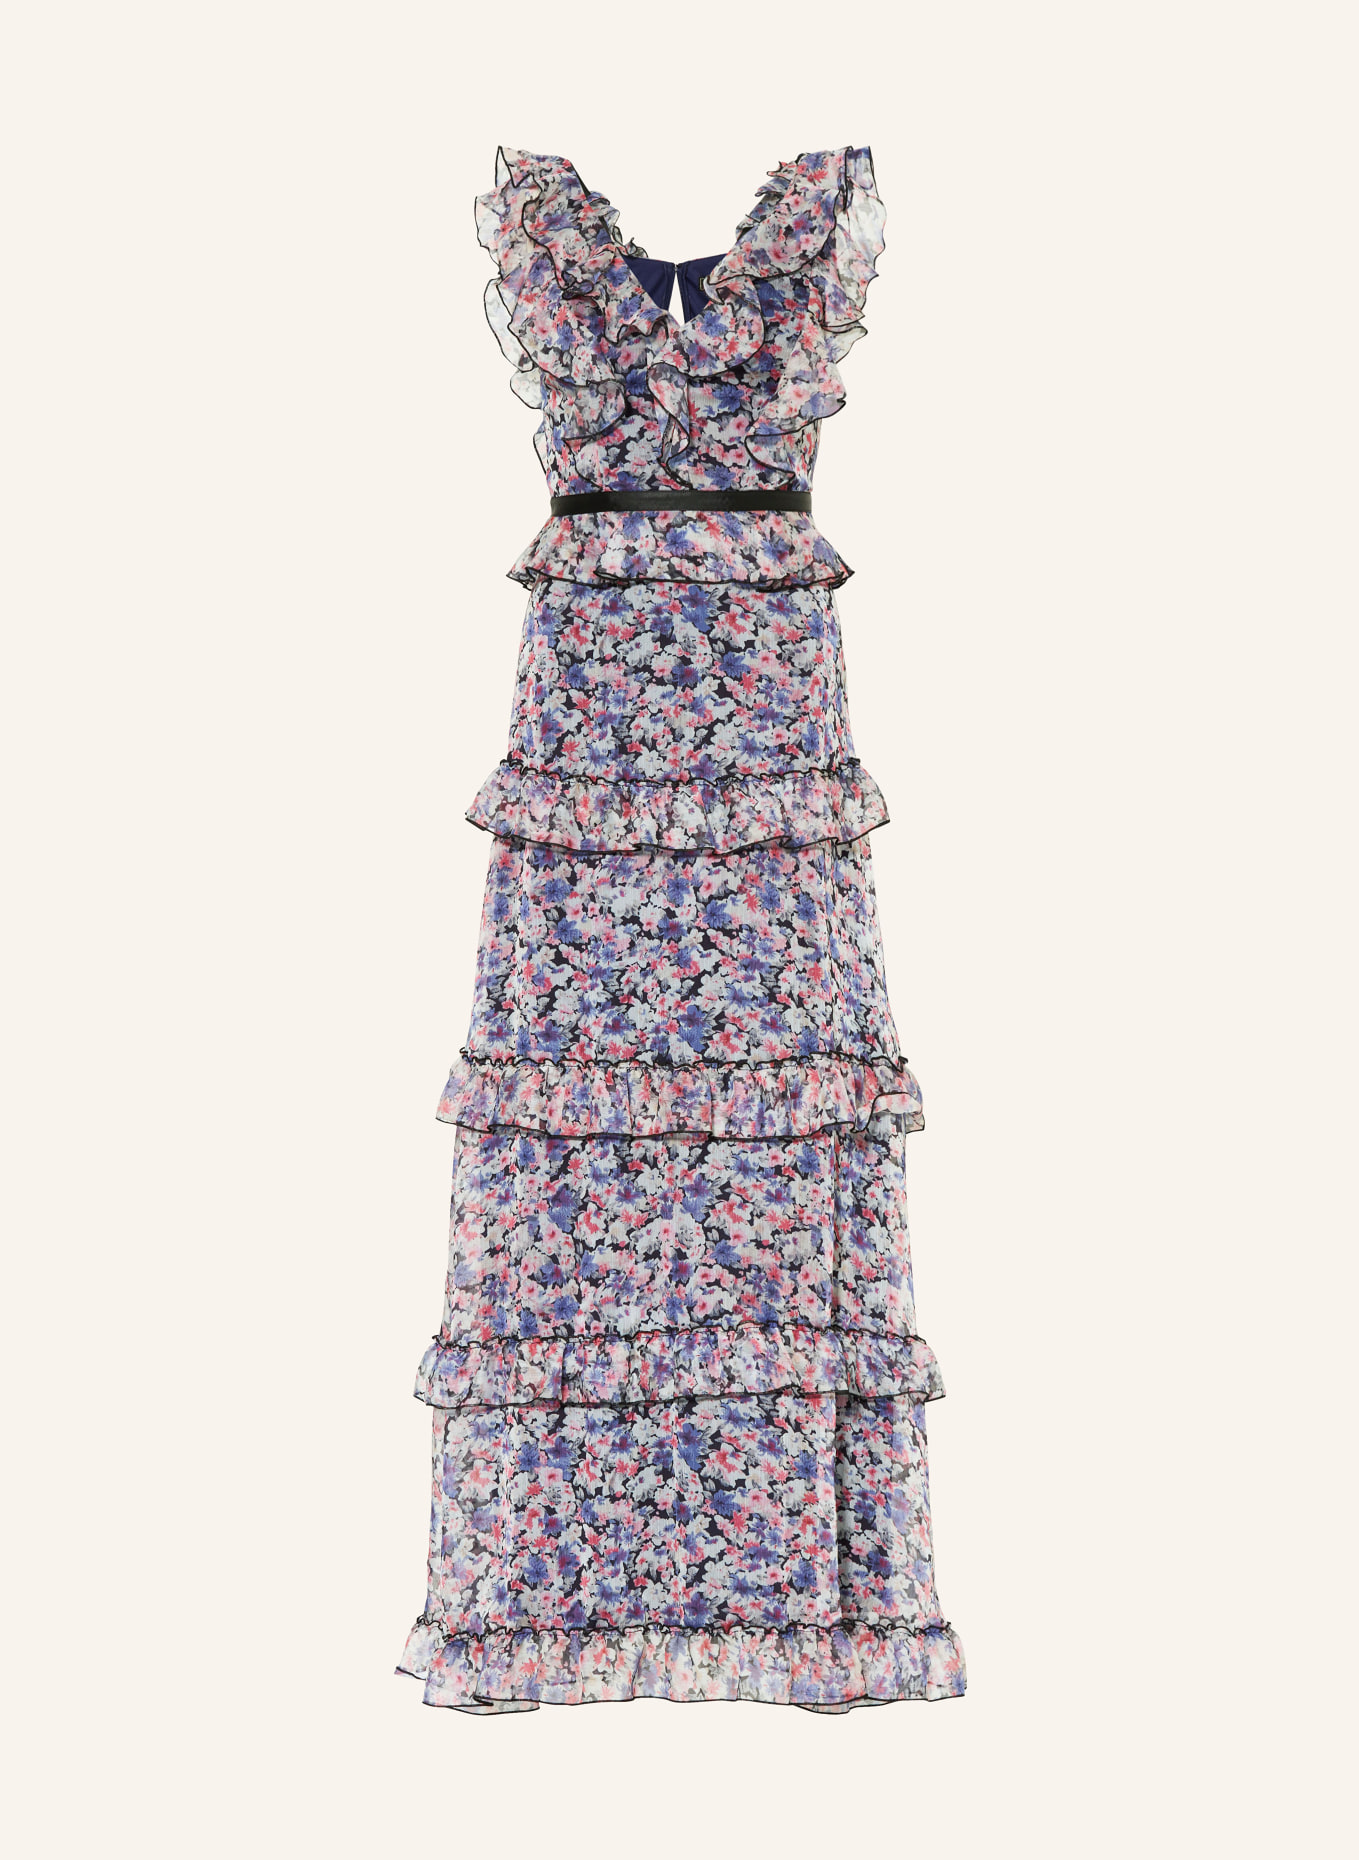 LIPSY Kleid DITSY mit Rüschen, Farbe: BLAUGRAU/ ROSA/ CREME (Bild 1)